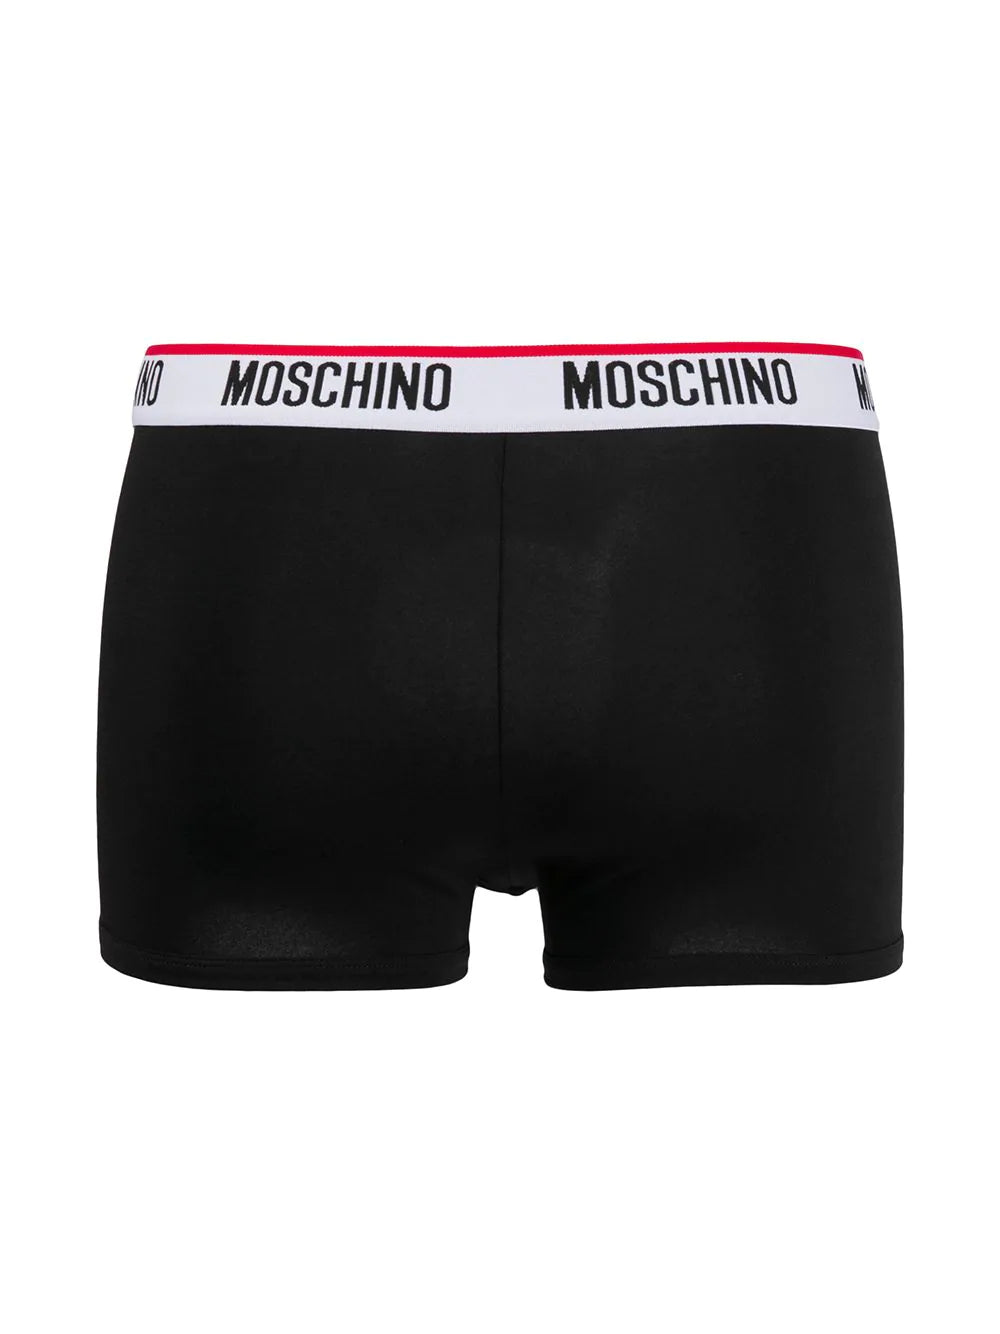 Moschino Black Logo Trunk Bi-Pack